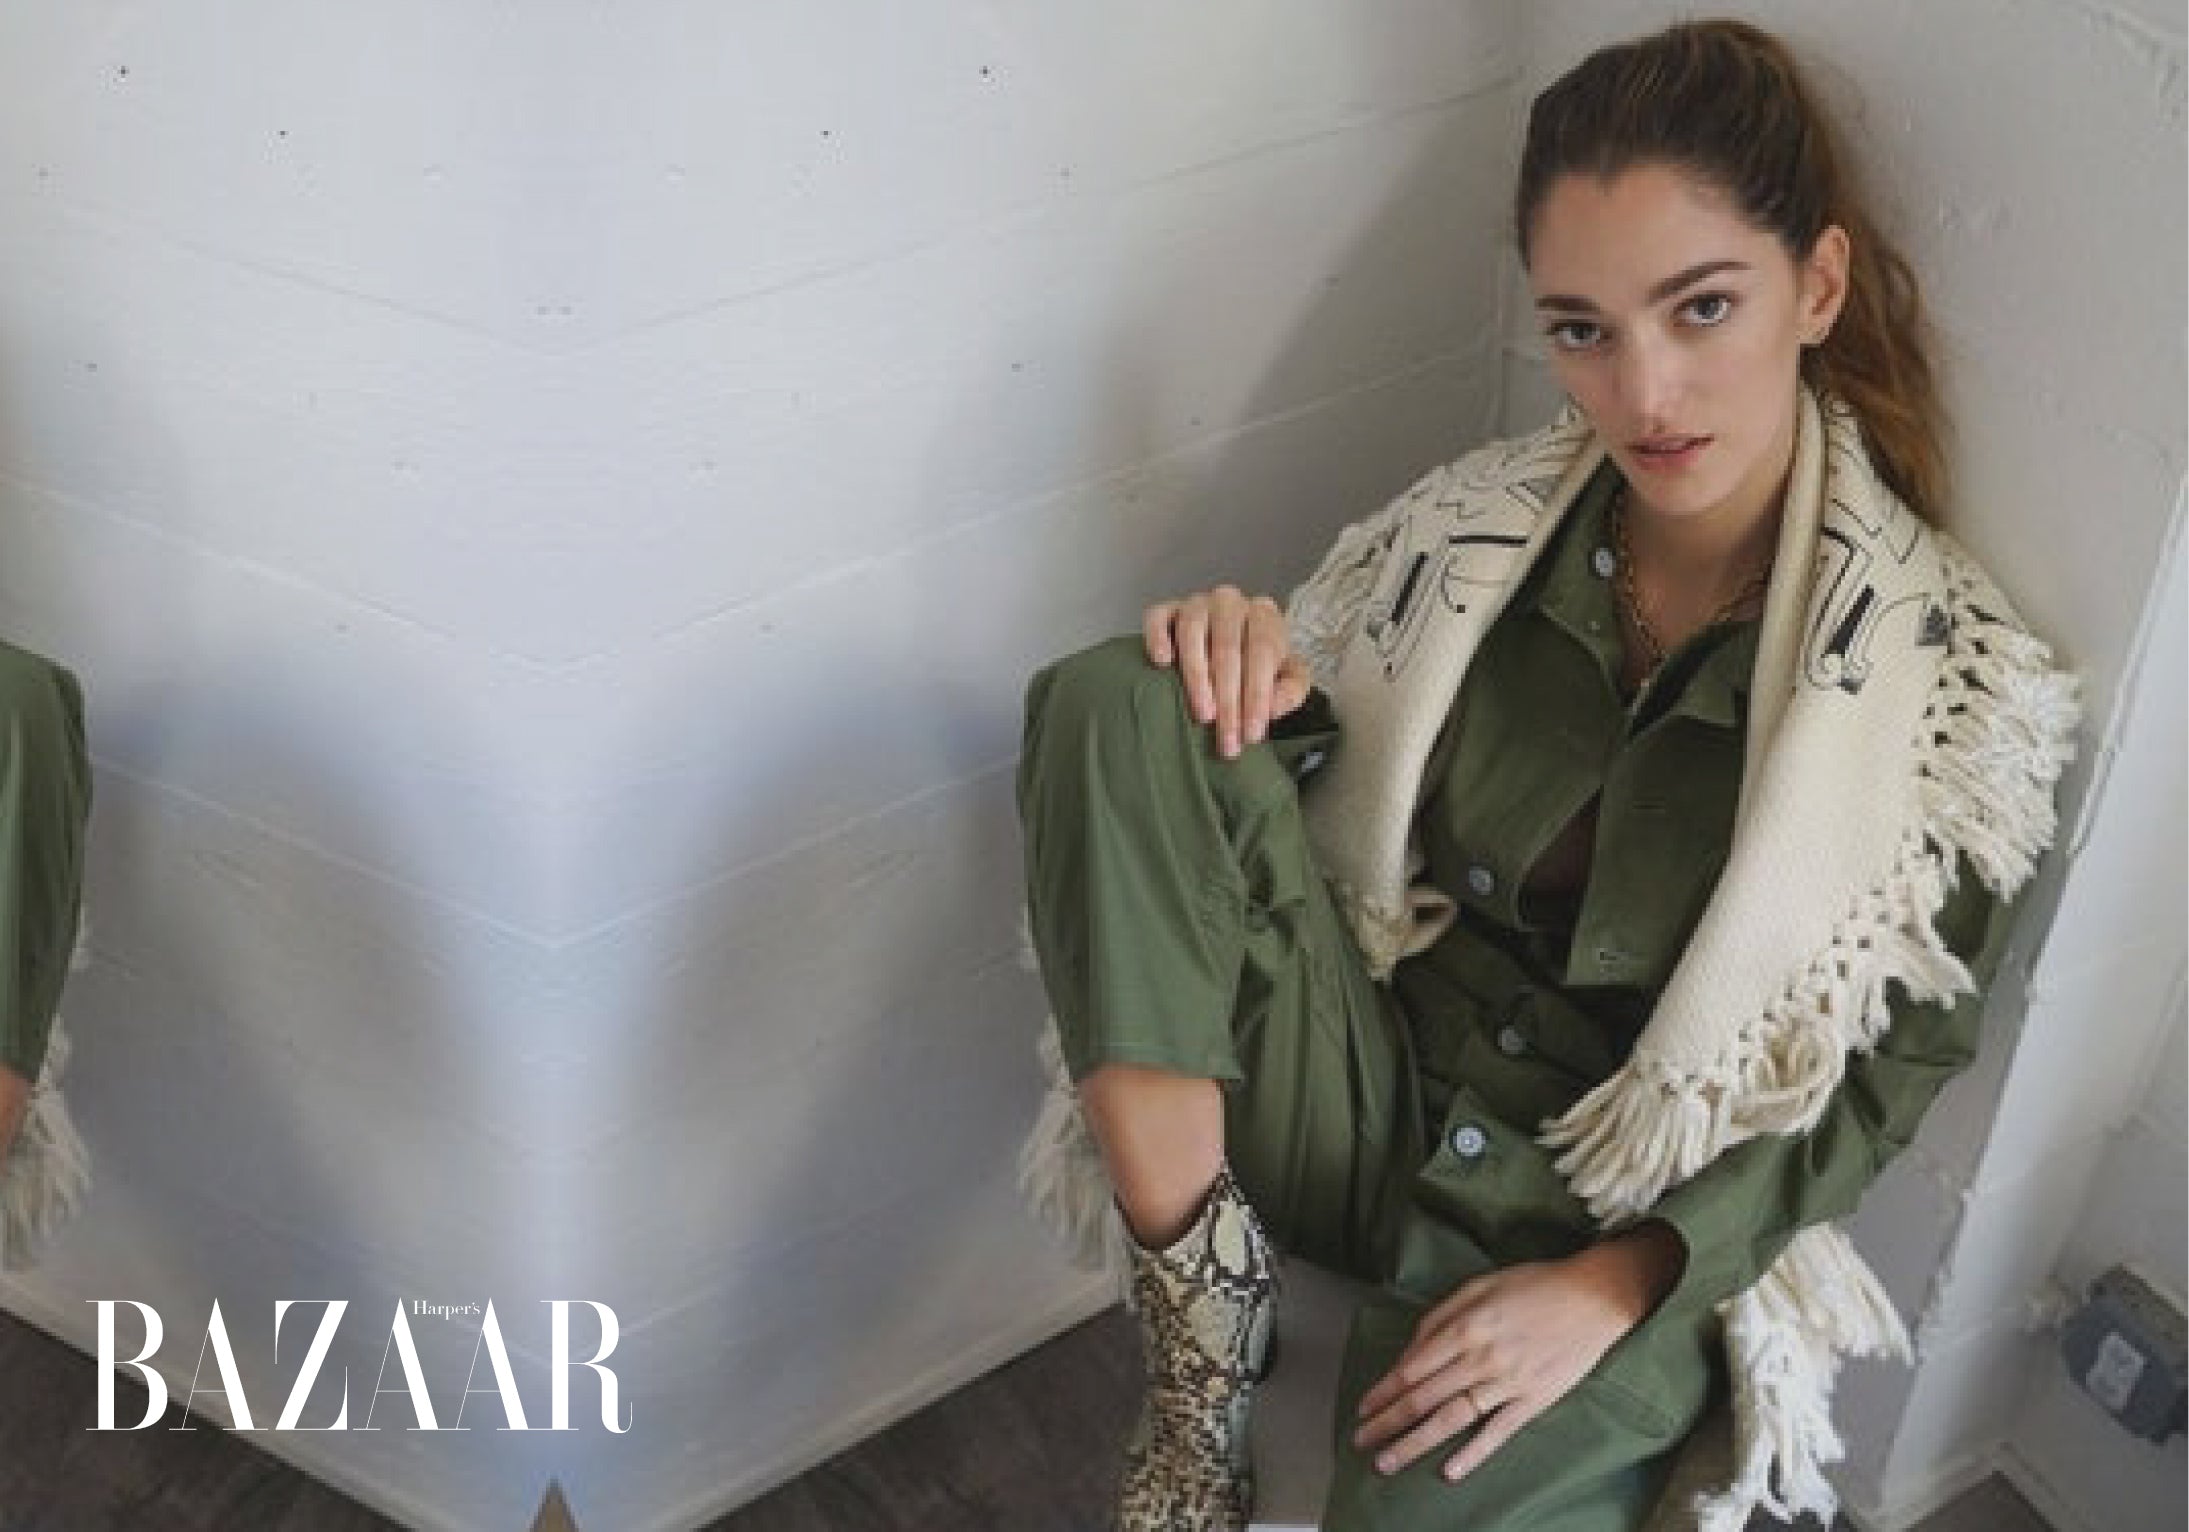 Harper's Bazaar - Sofia Sanchez de betak's Closet Favorite, 3 Ways